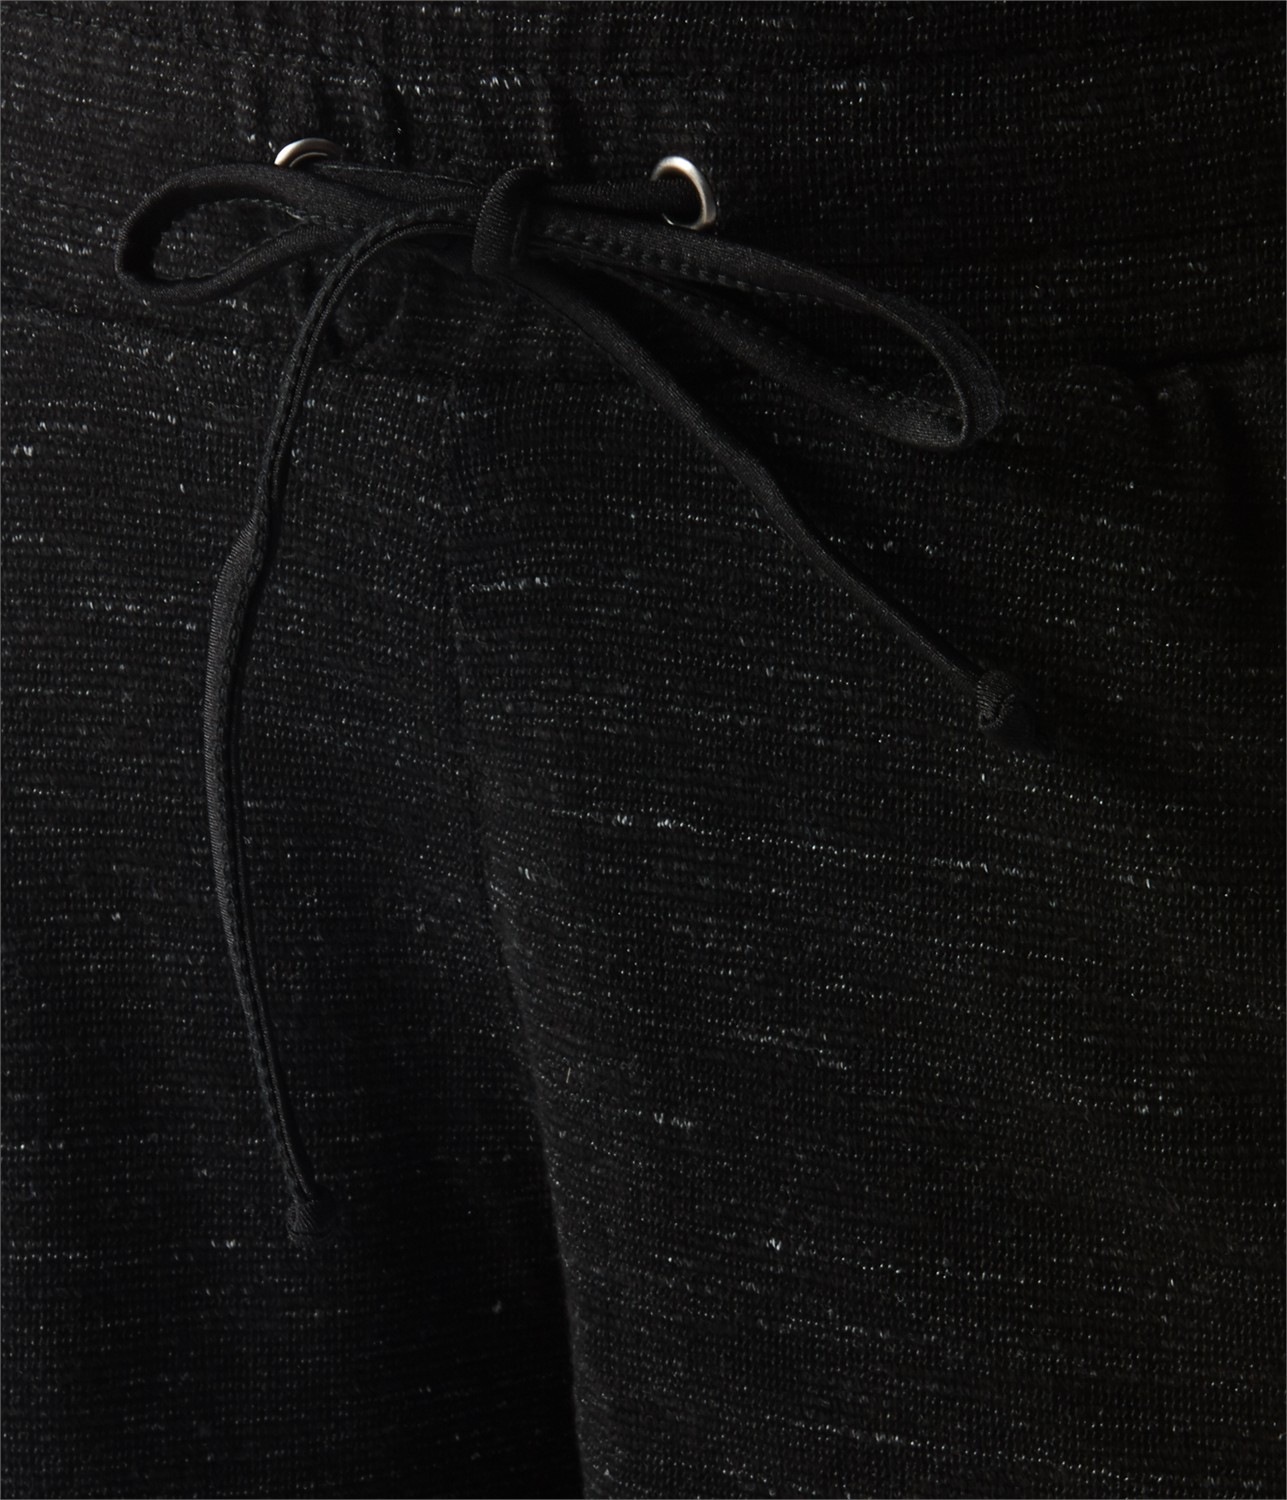 Camaieu fekete pizsama sort éjszakára 2015.03.04 fotója